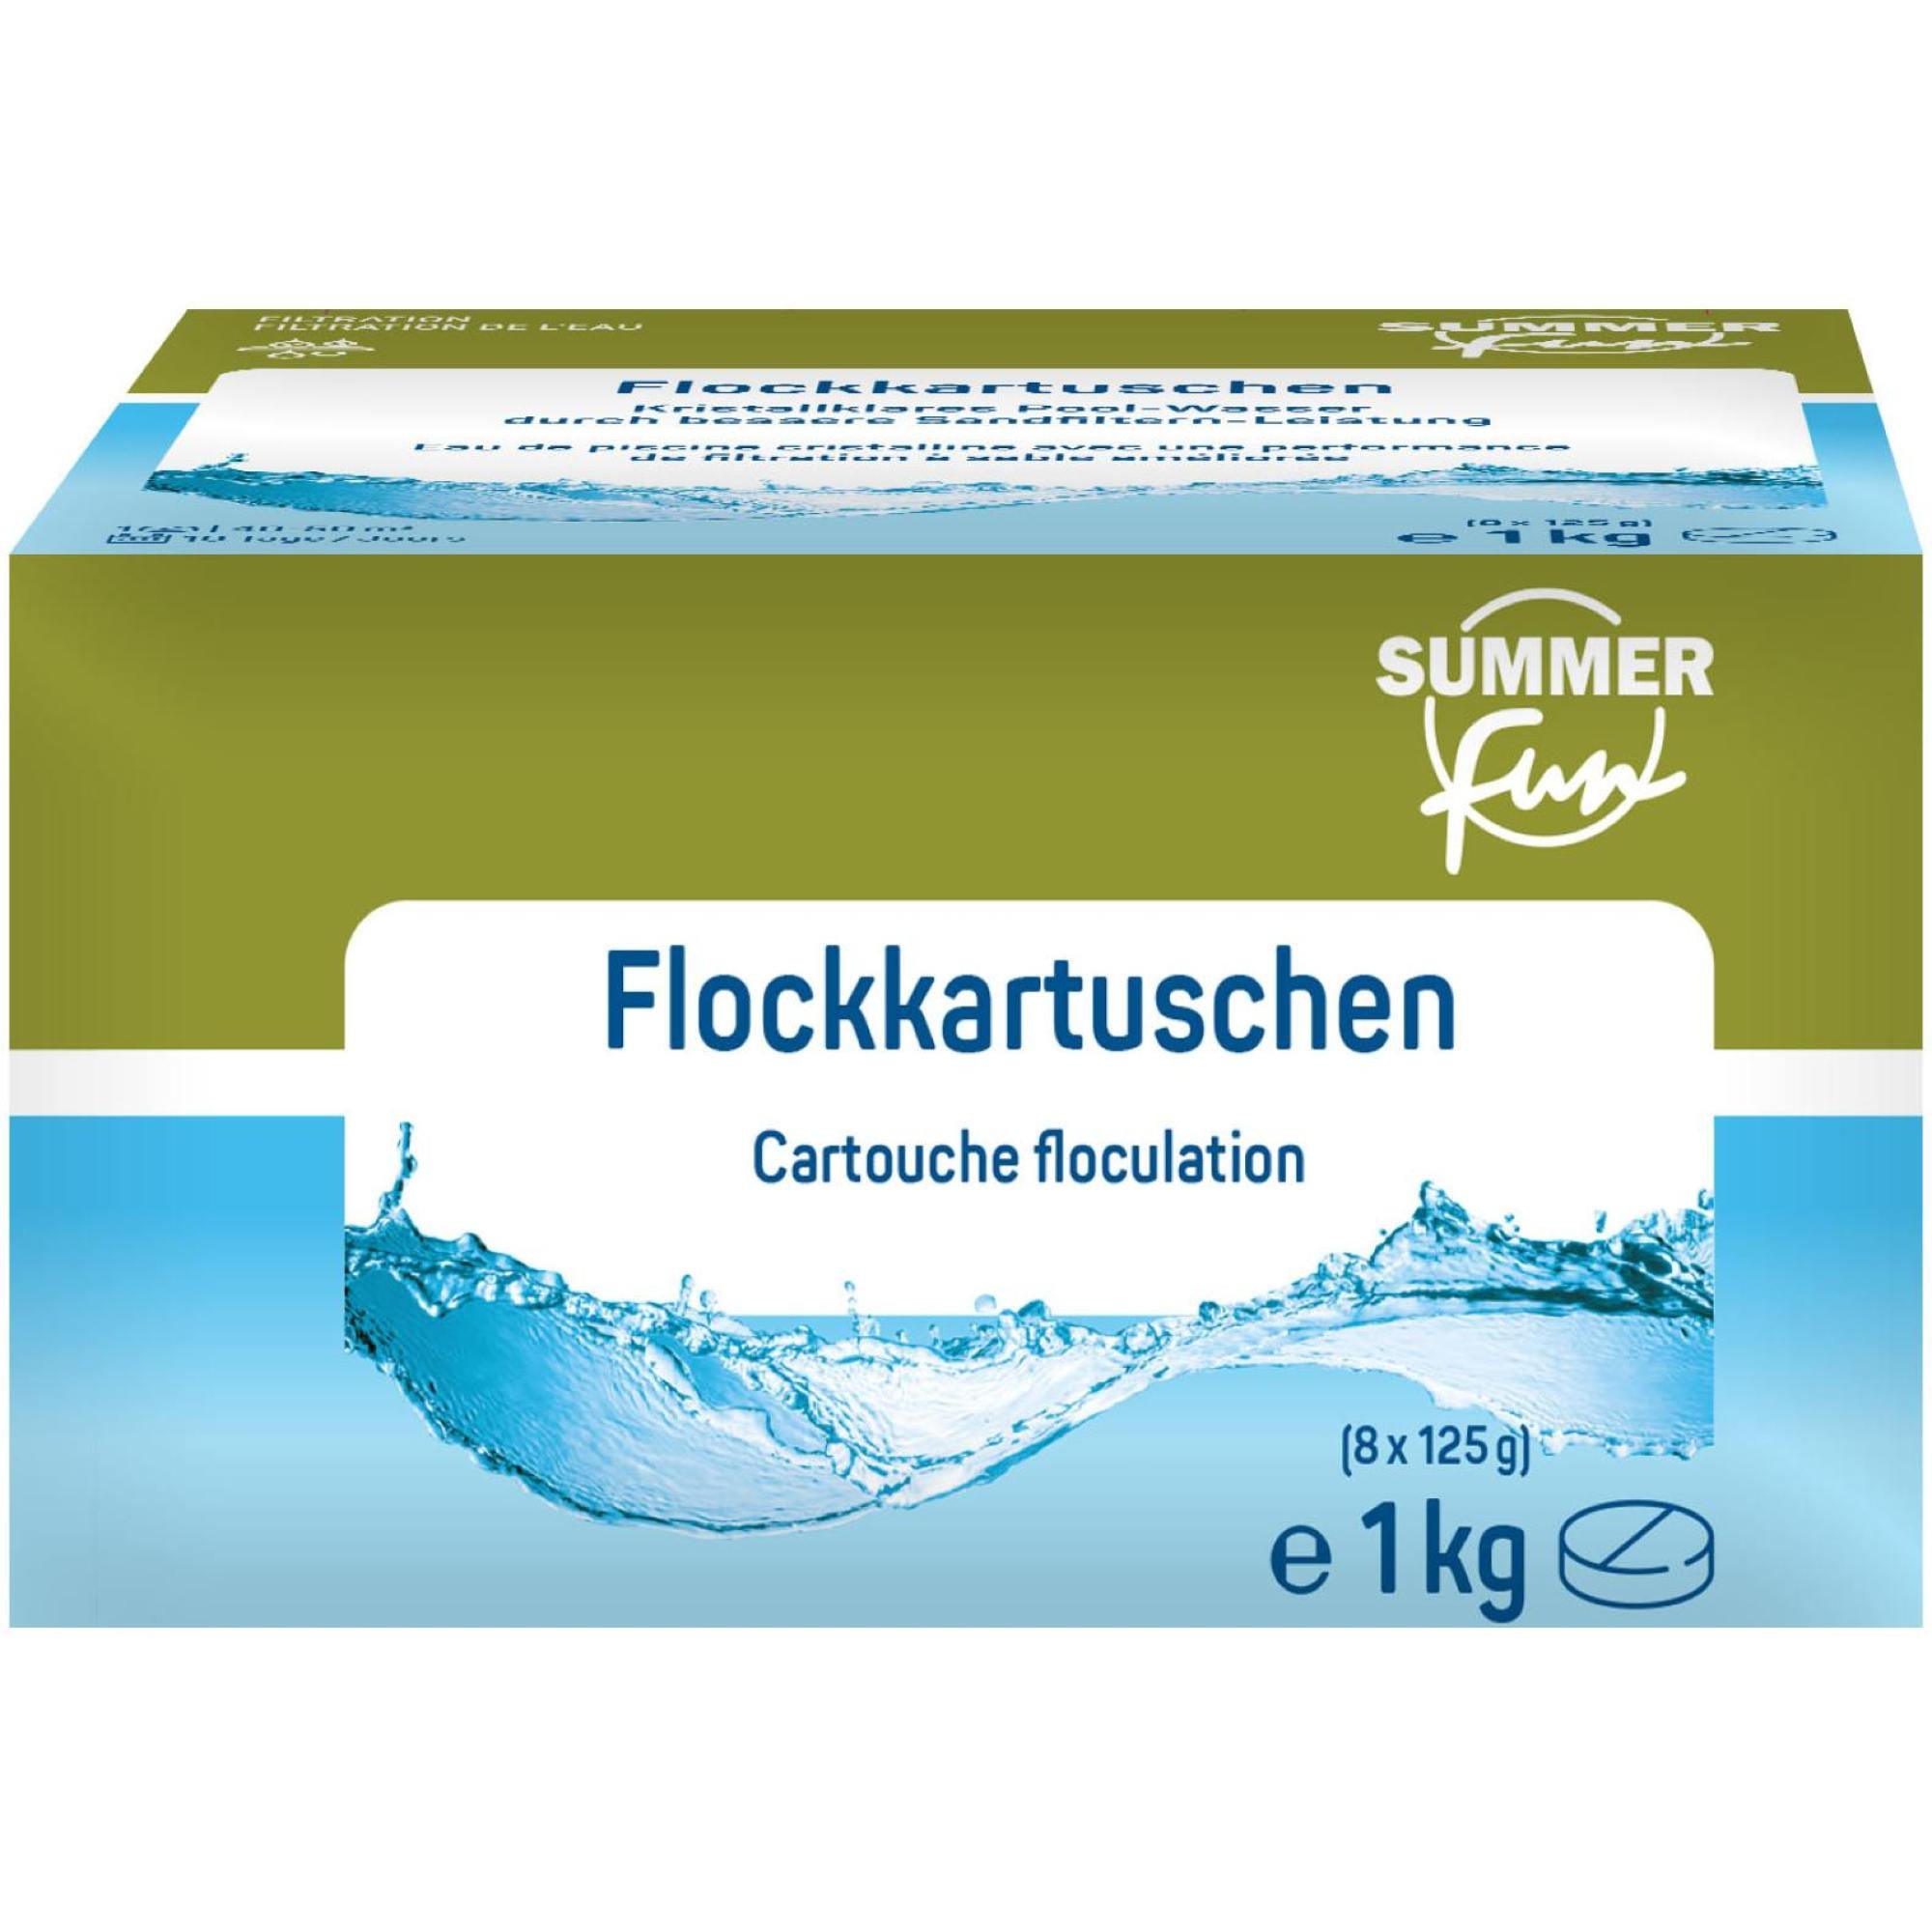 Summer Fun Flockkartuschen (8x125g) - 1 kg